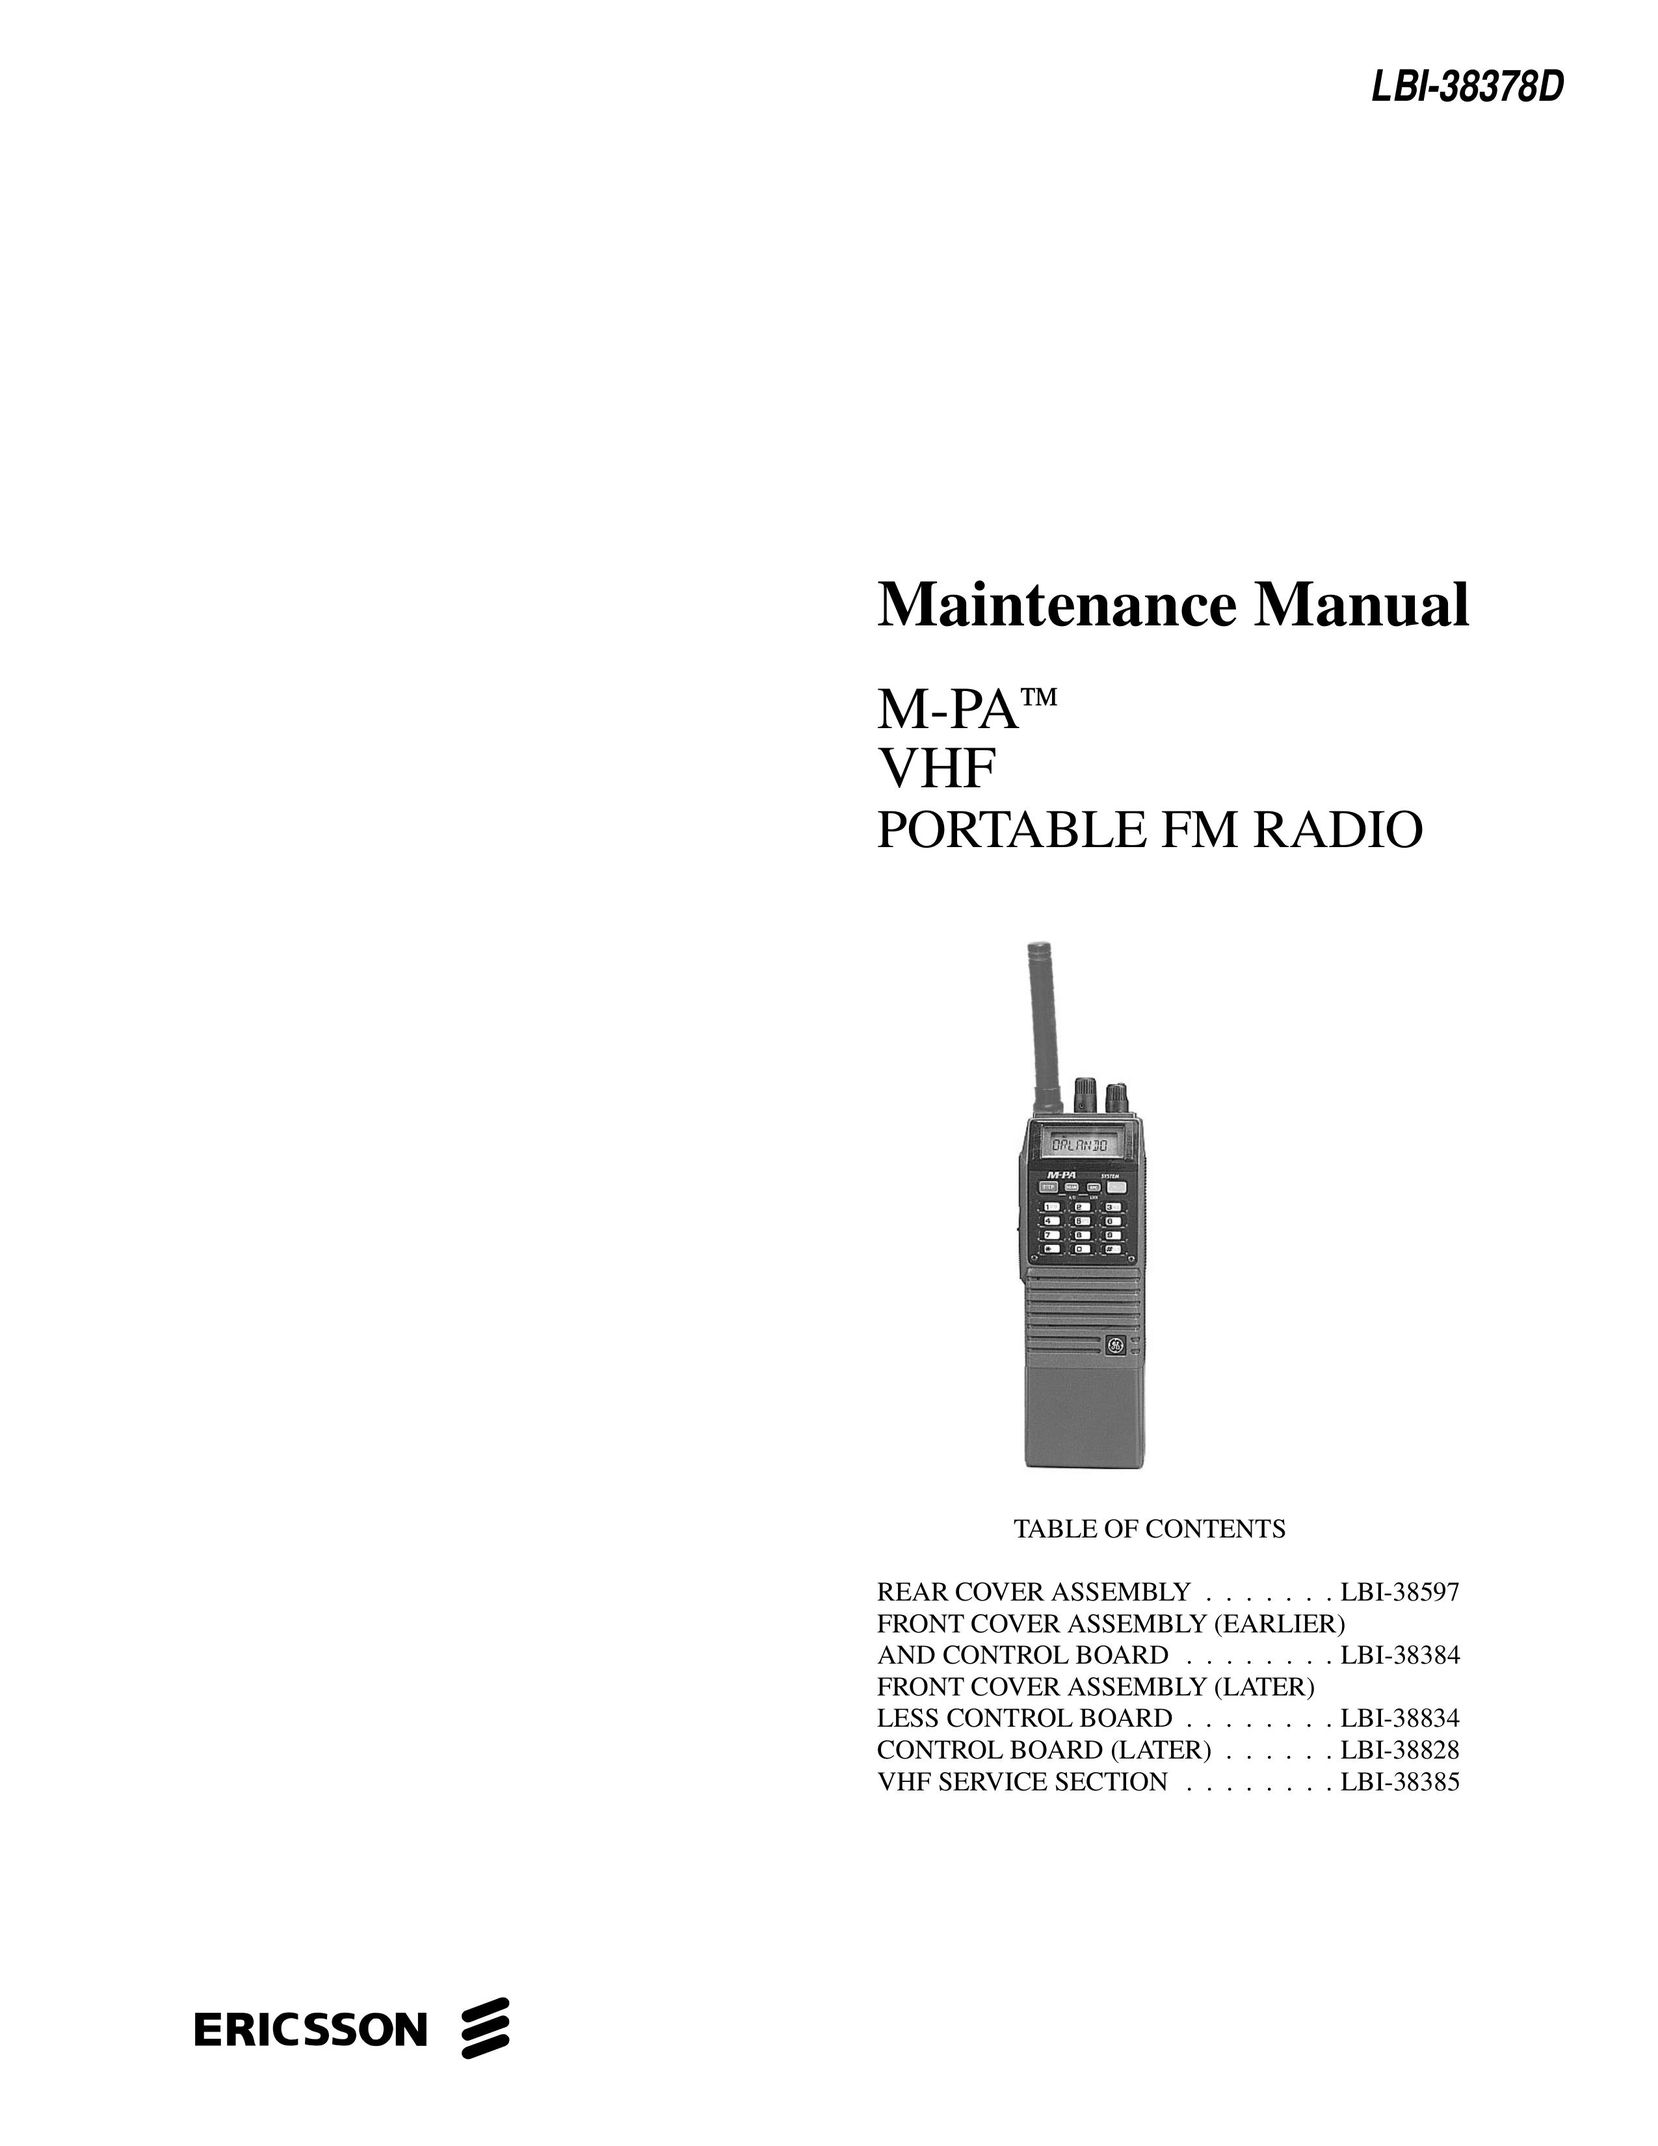 Ericsson LBI-38378D Portable Radio User Manual